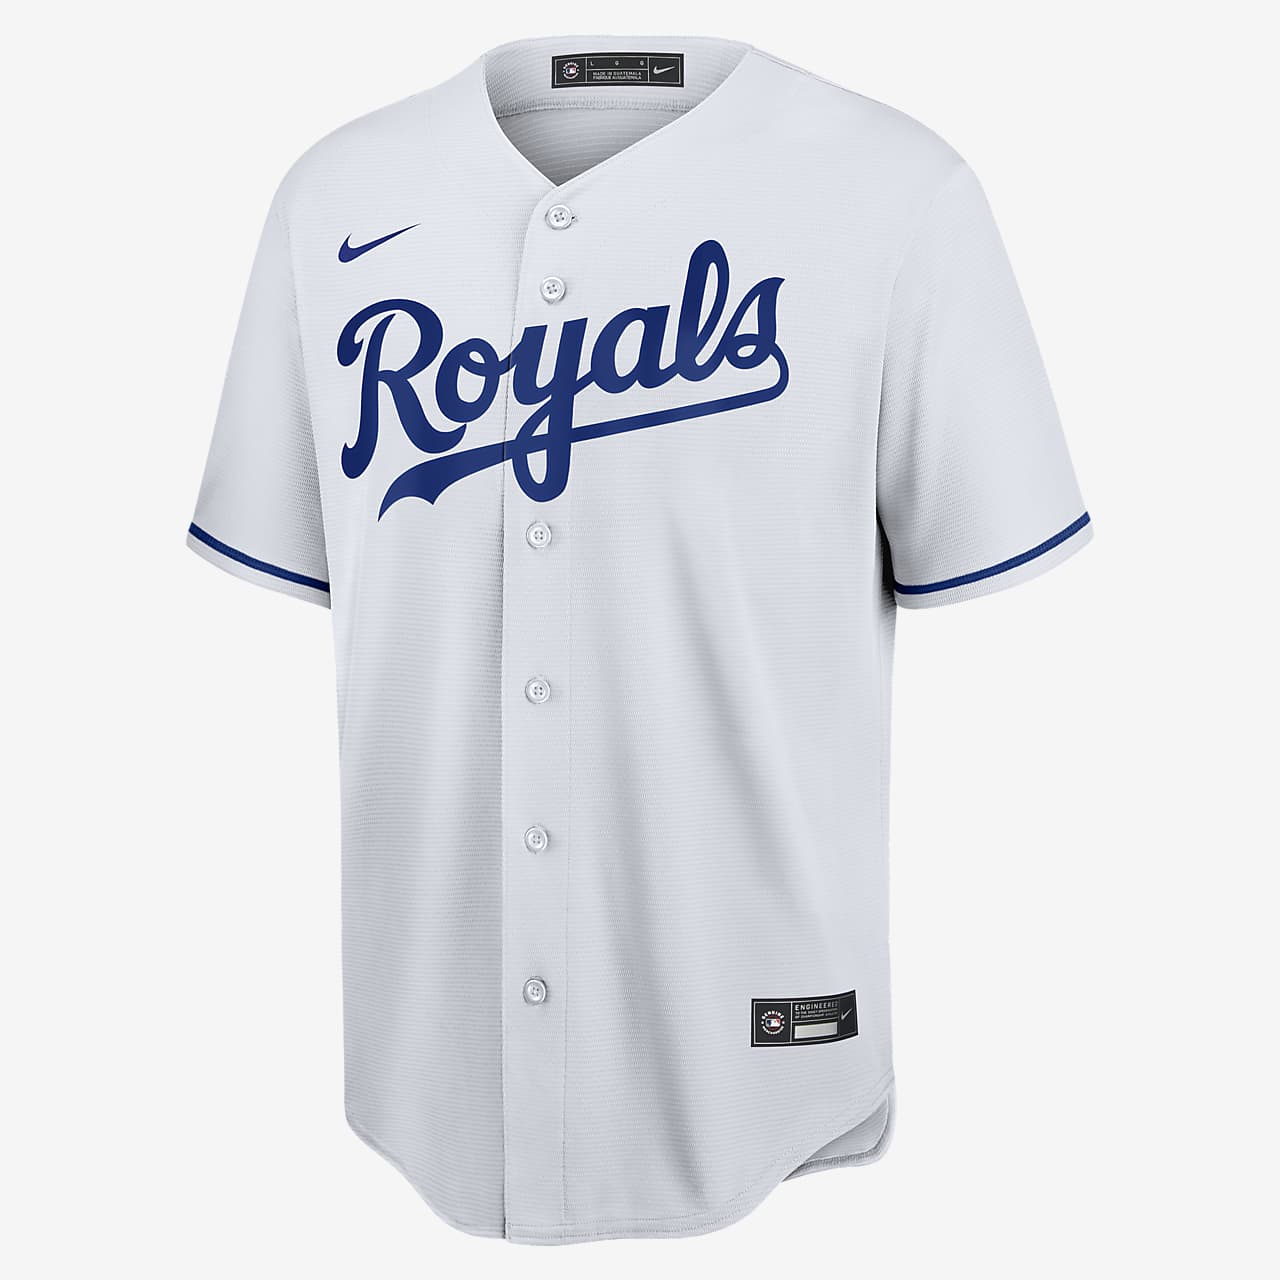 kansas city royals baseball jersey